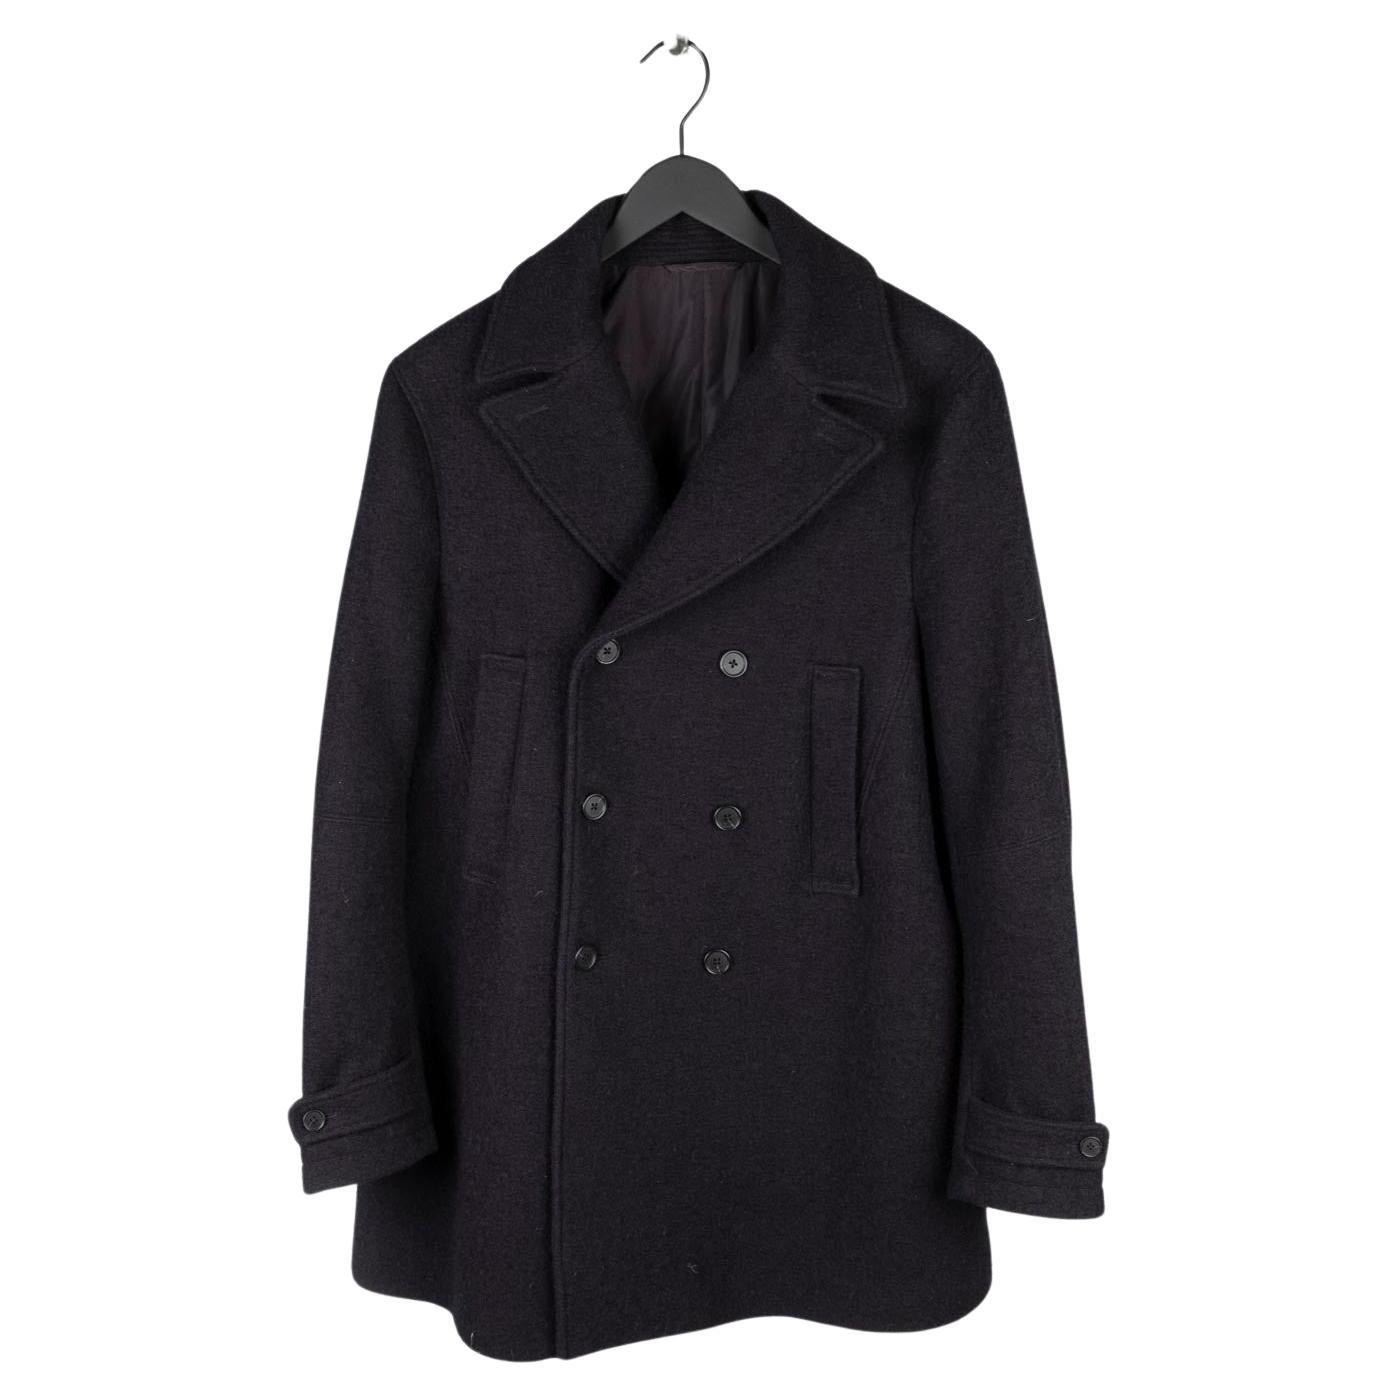  Z Zegna Men Coat Peacoat Jacket Size XL For Sale